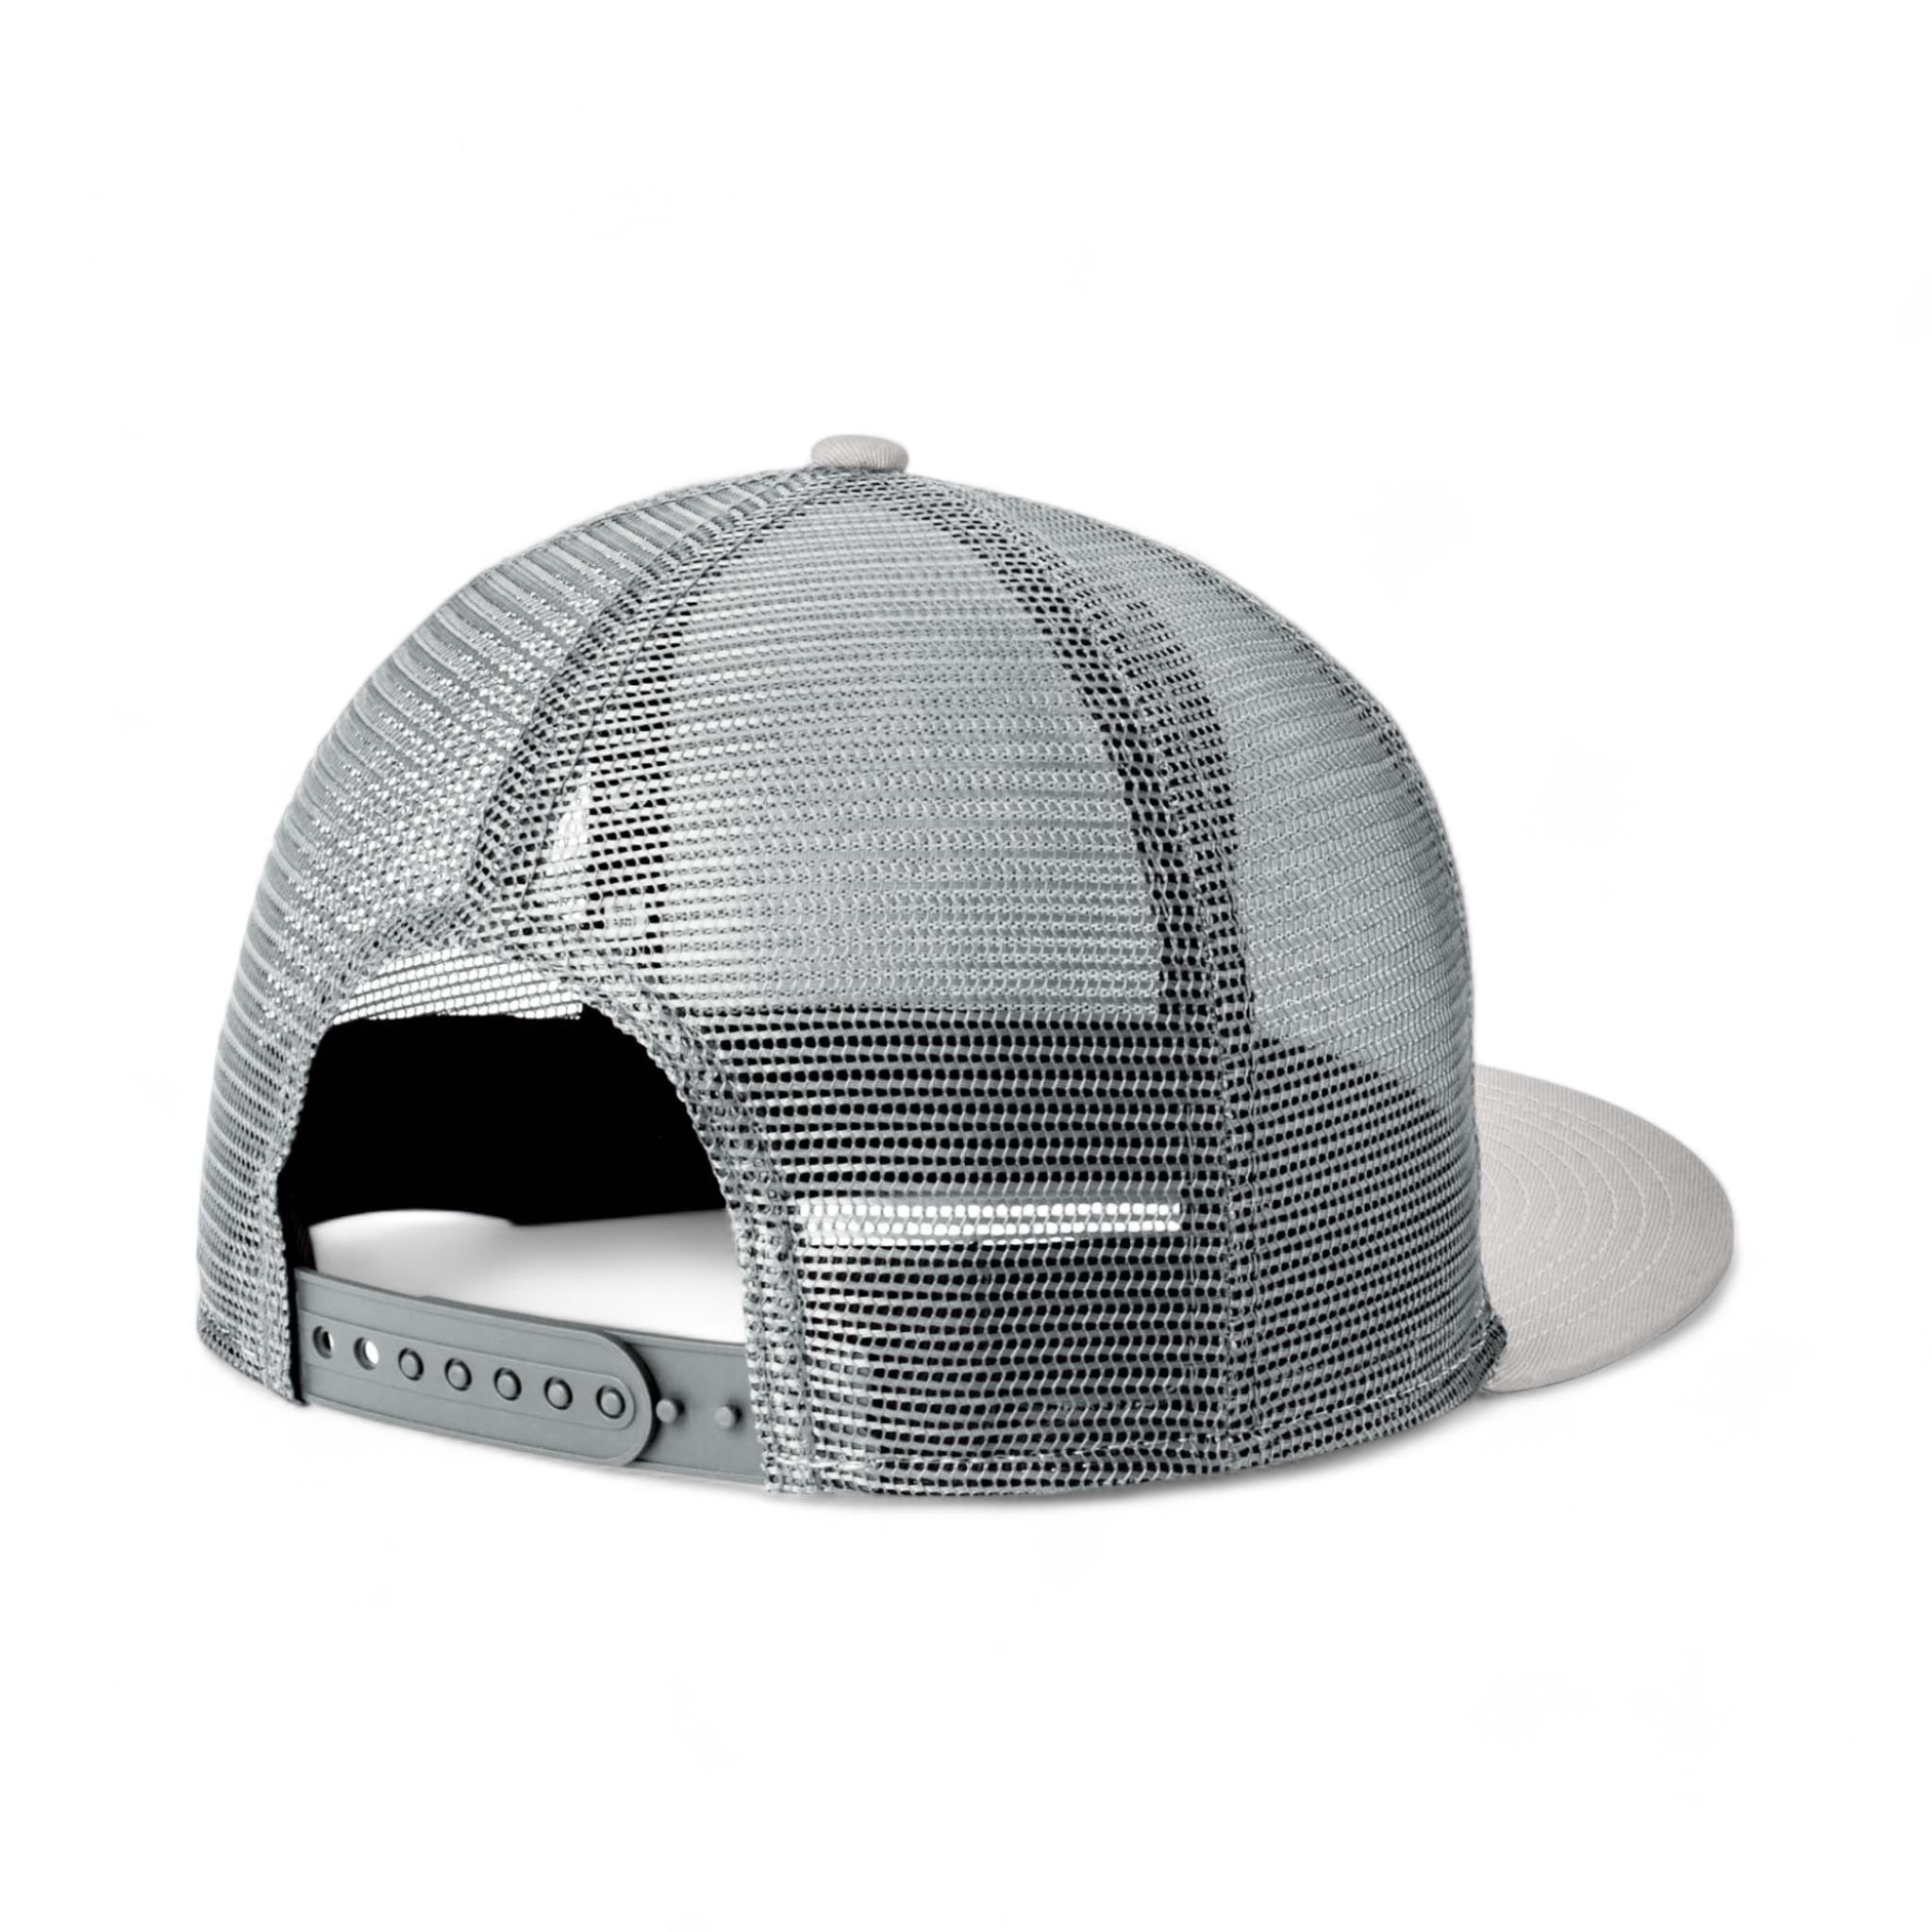 Back view of New Era NE4030 custom hat in grey and graphite